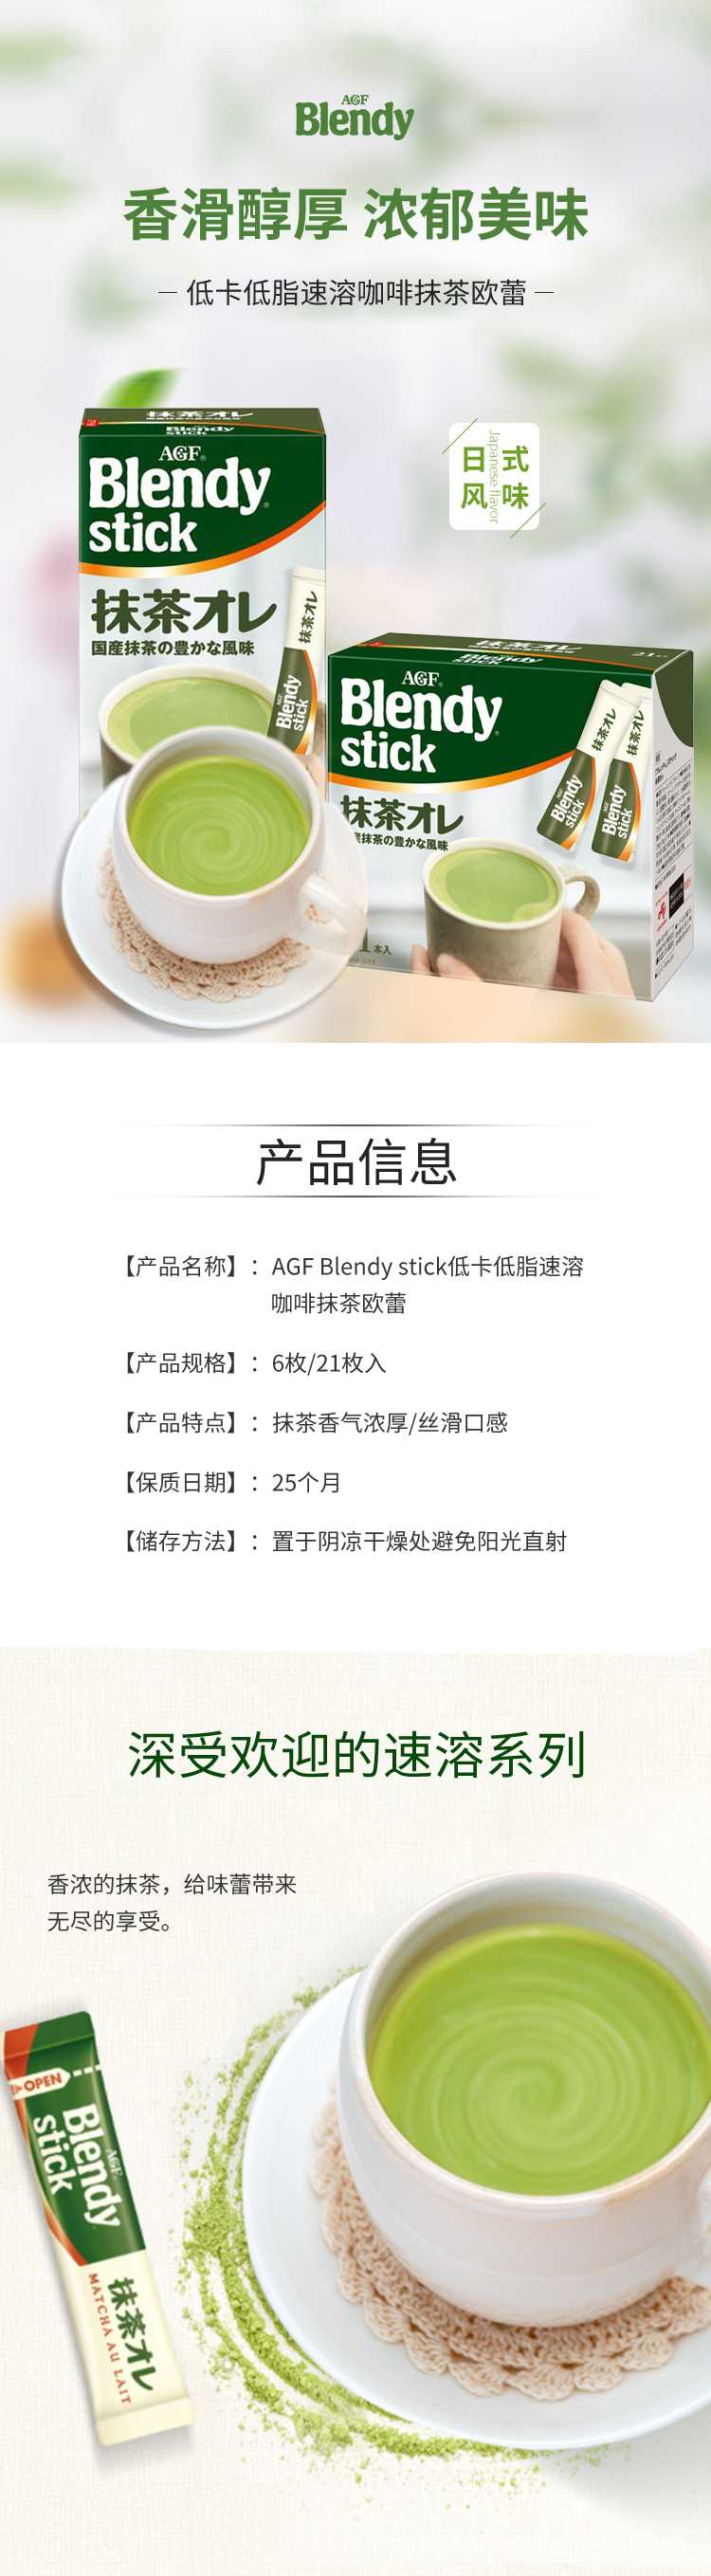 AGF-Blendy-stick低卡低脂速溶咖啡抹茶欧蕾6枚21枚入_01.jpg